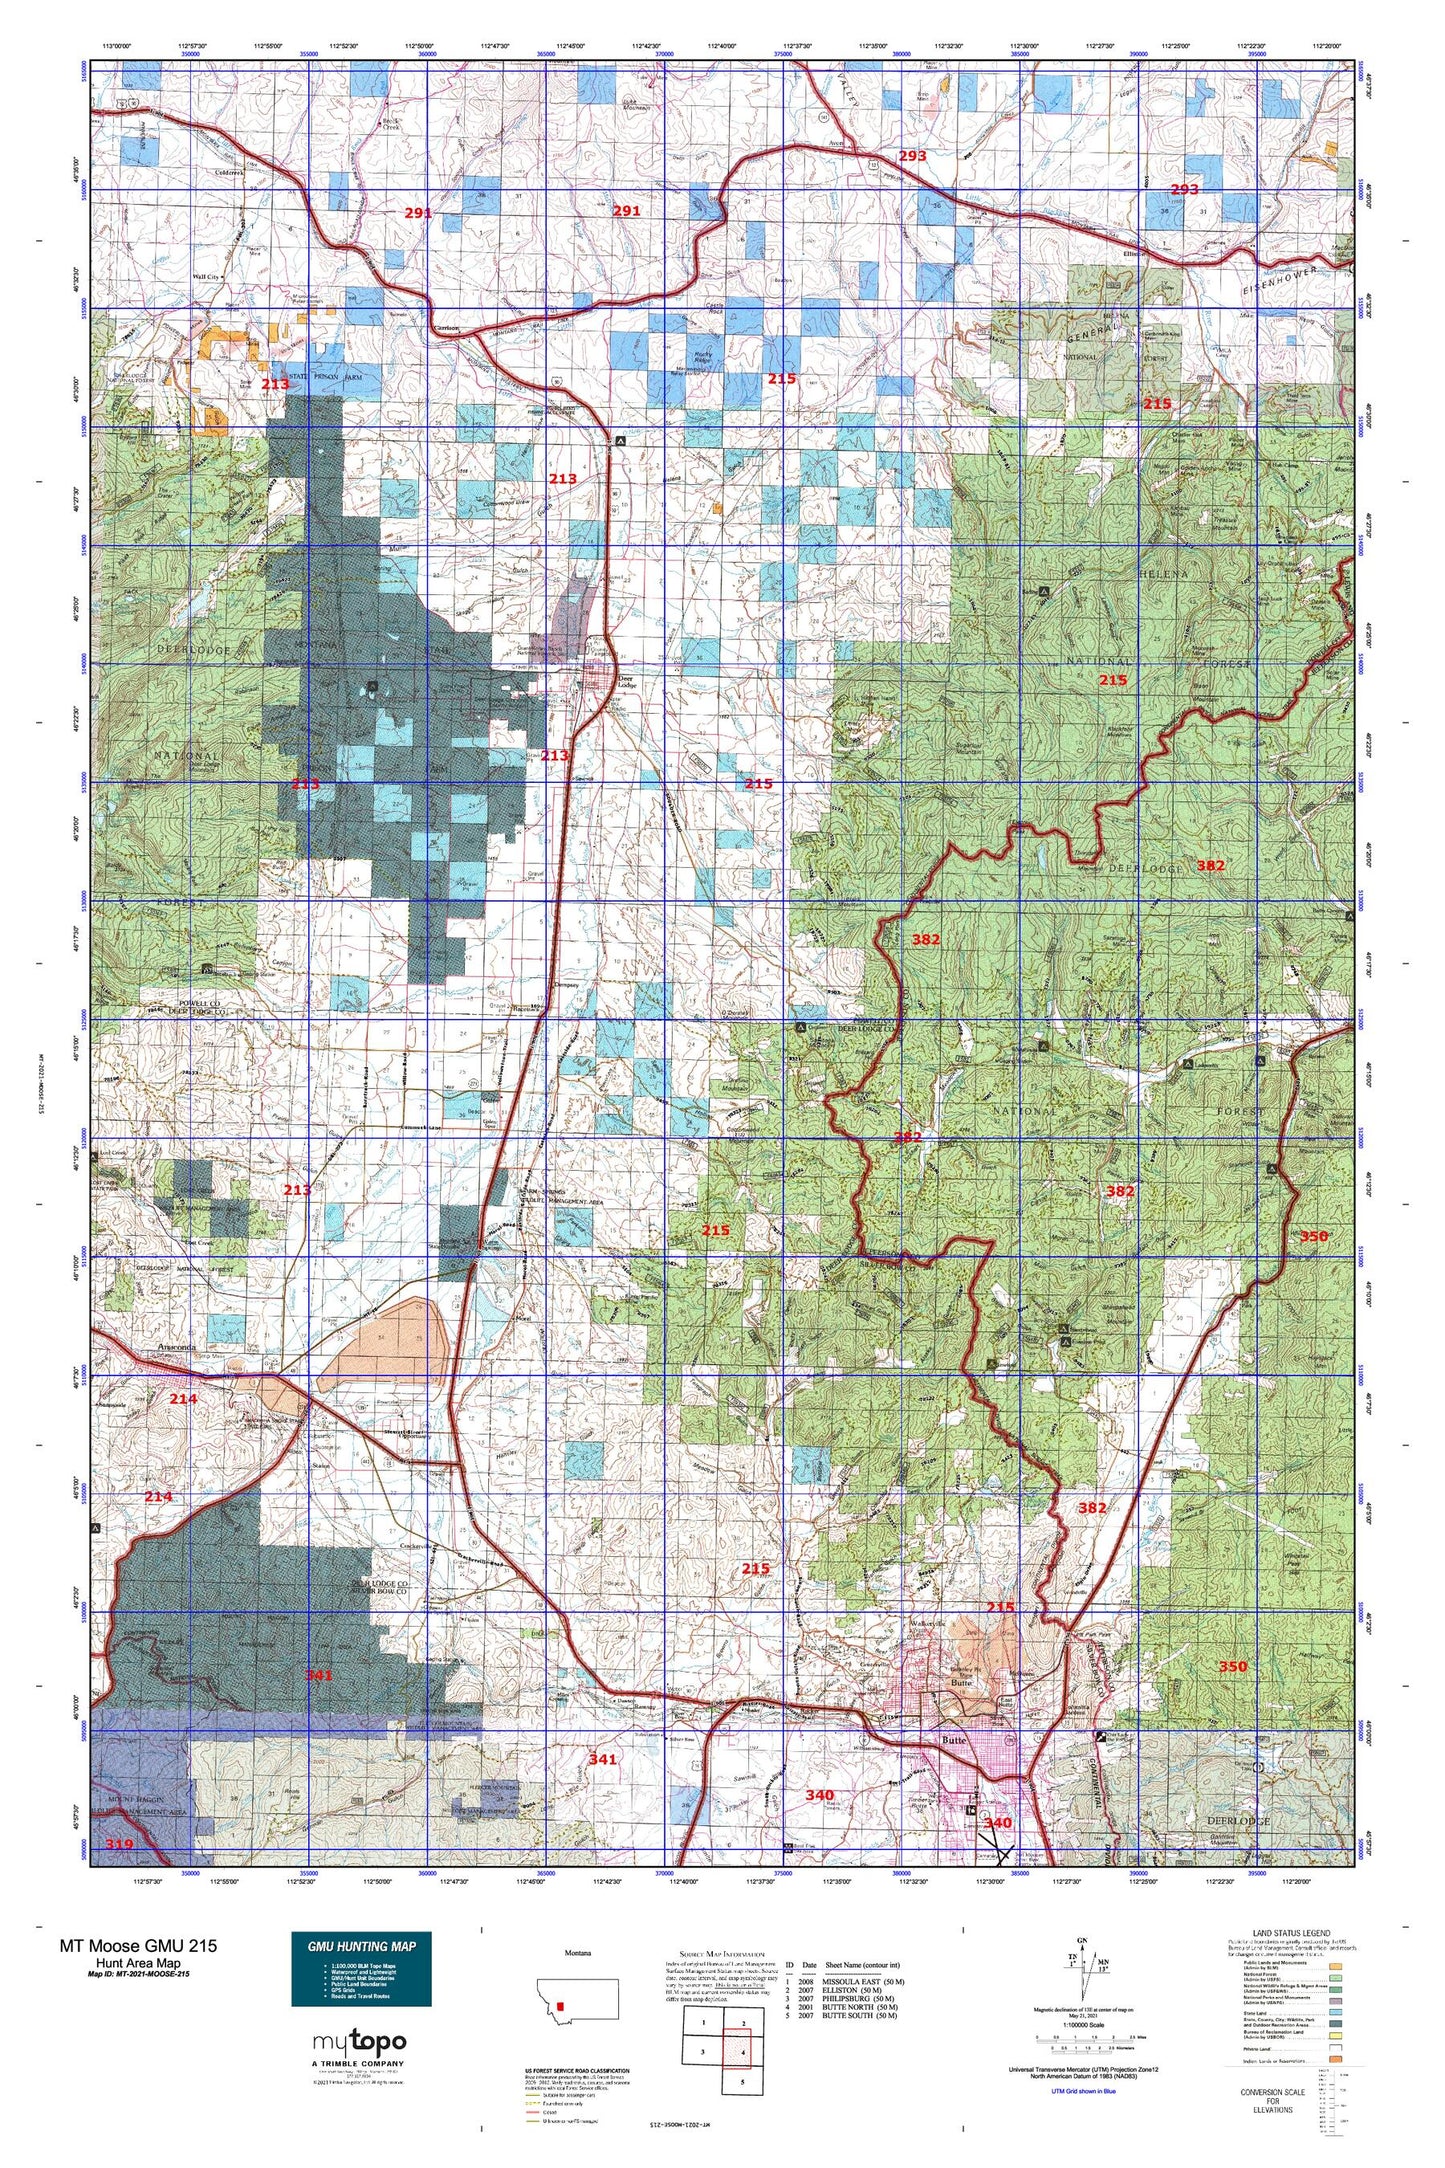 Montana Moose GMU 215 Map Image